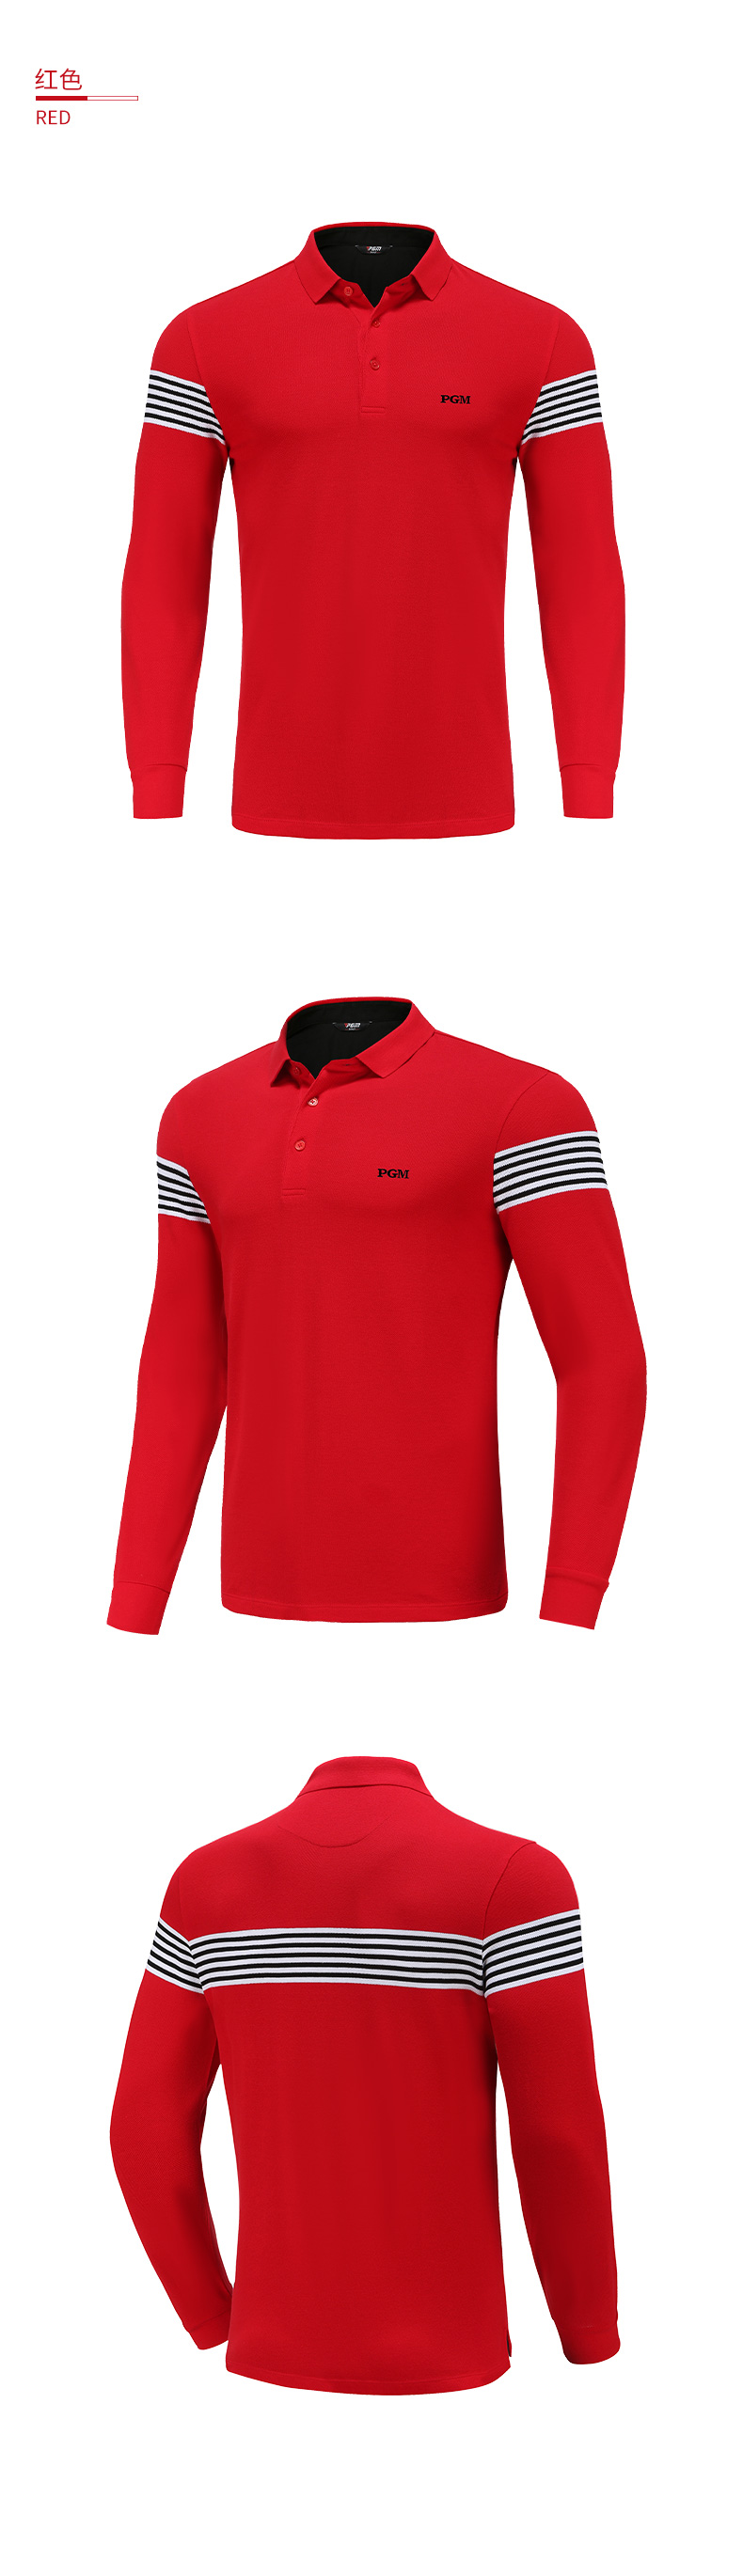 PGM 高尔夫服装男装 男士长袖t恤 秋冬季polo衫 golf球衣服上衣